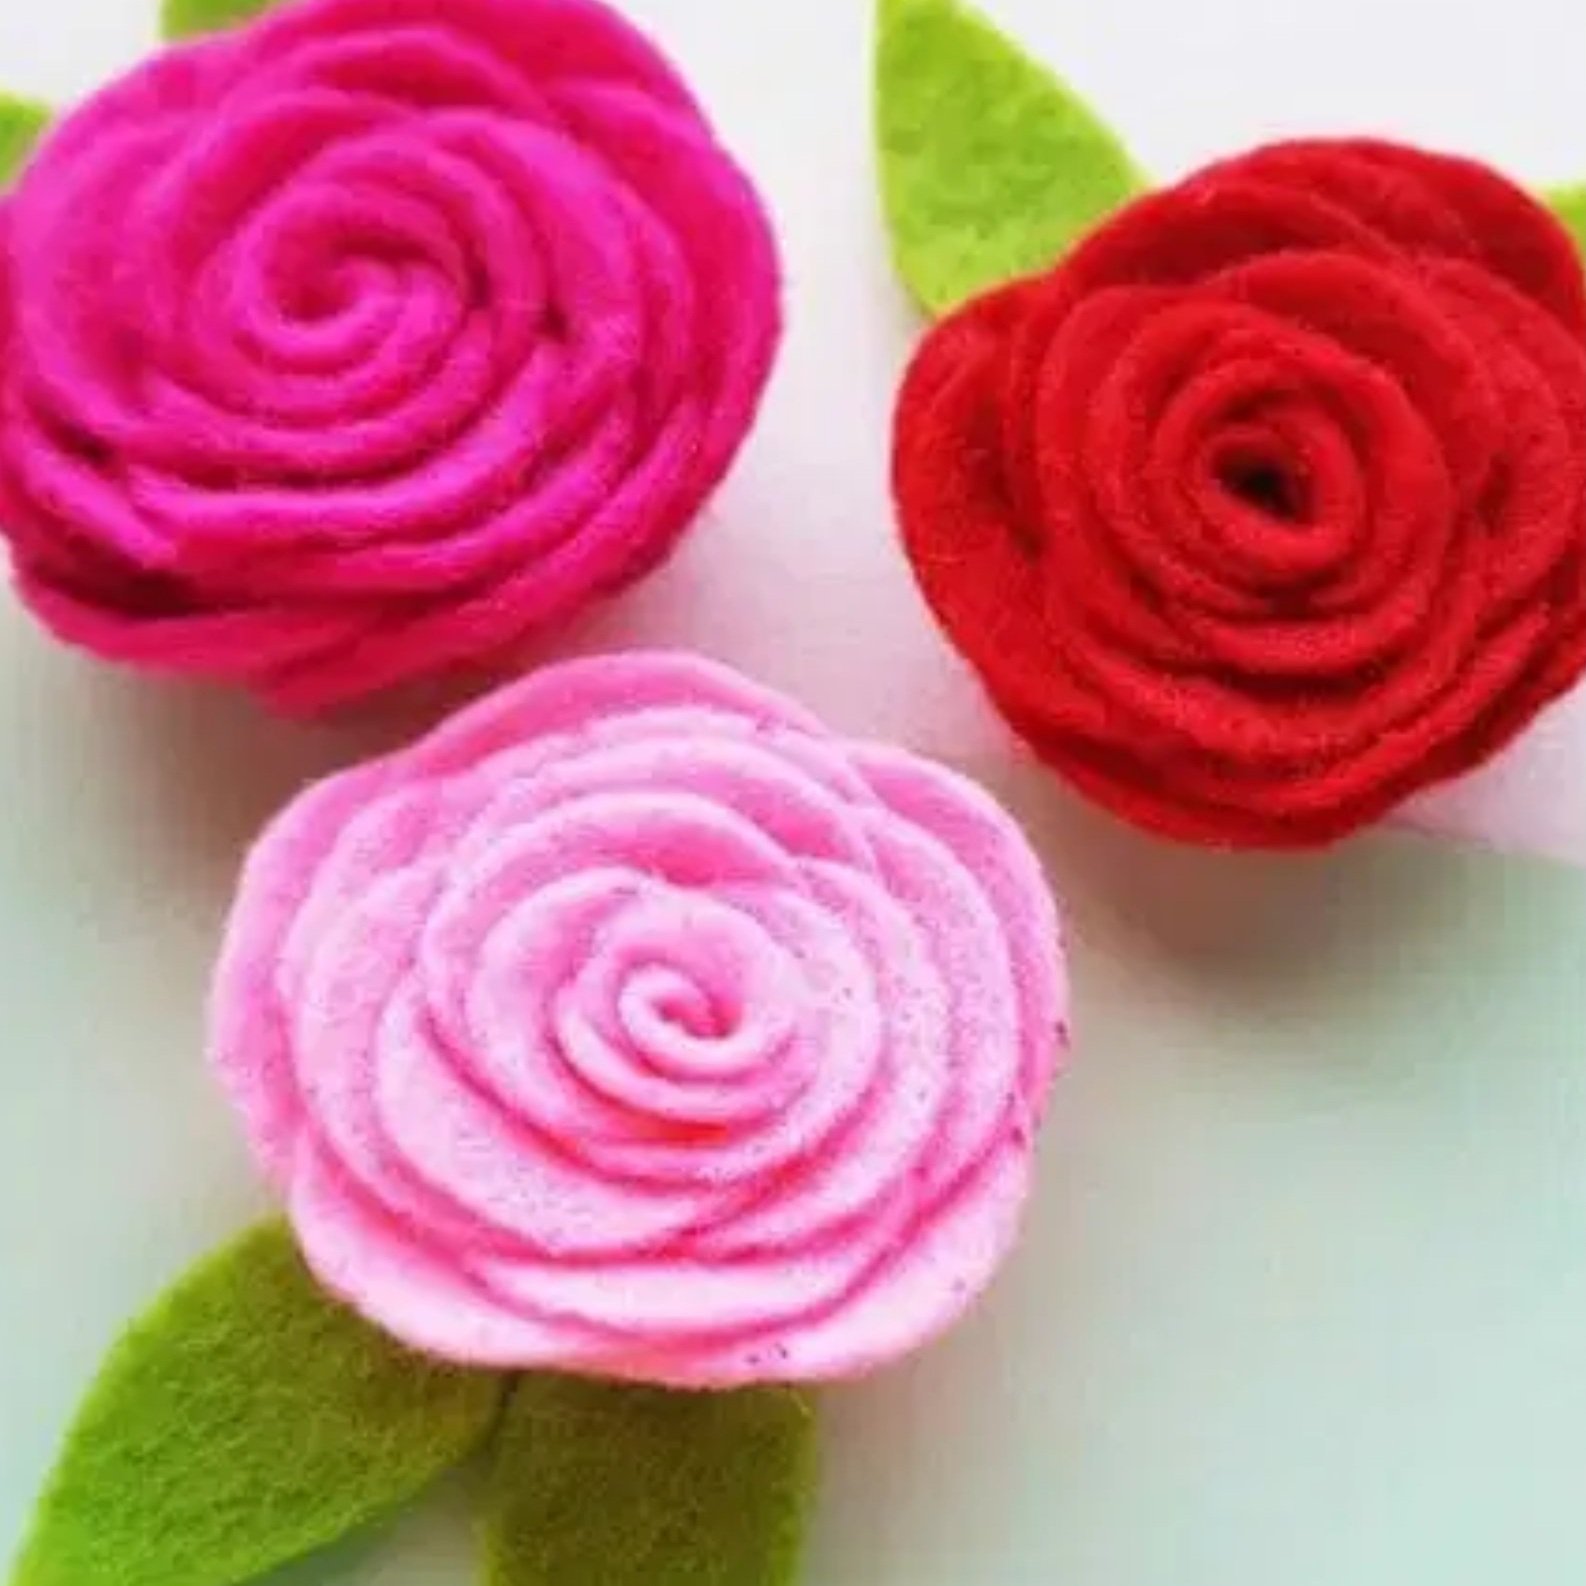 Felt Flower Embellishments for Crafts - Pink Flowers - Variety Pack